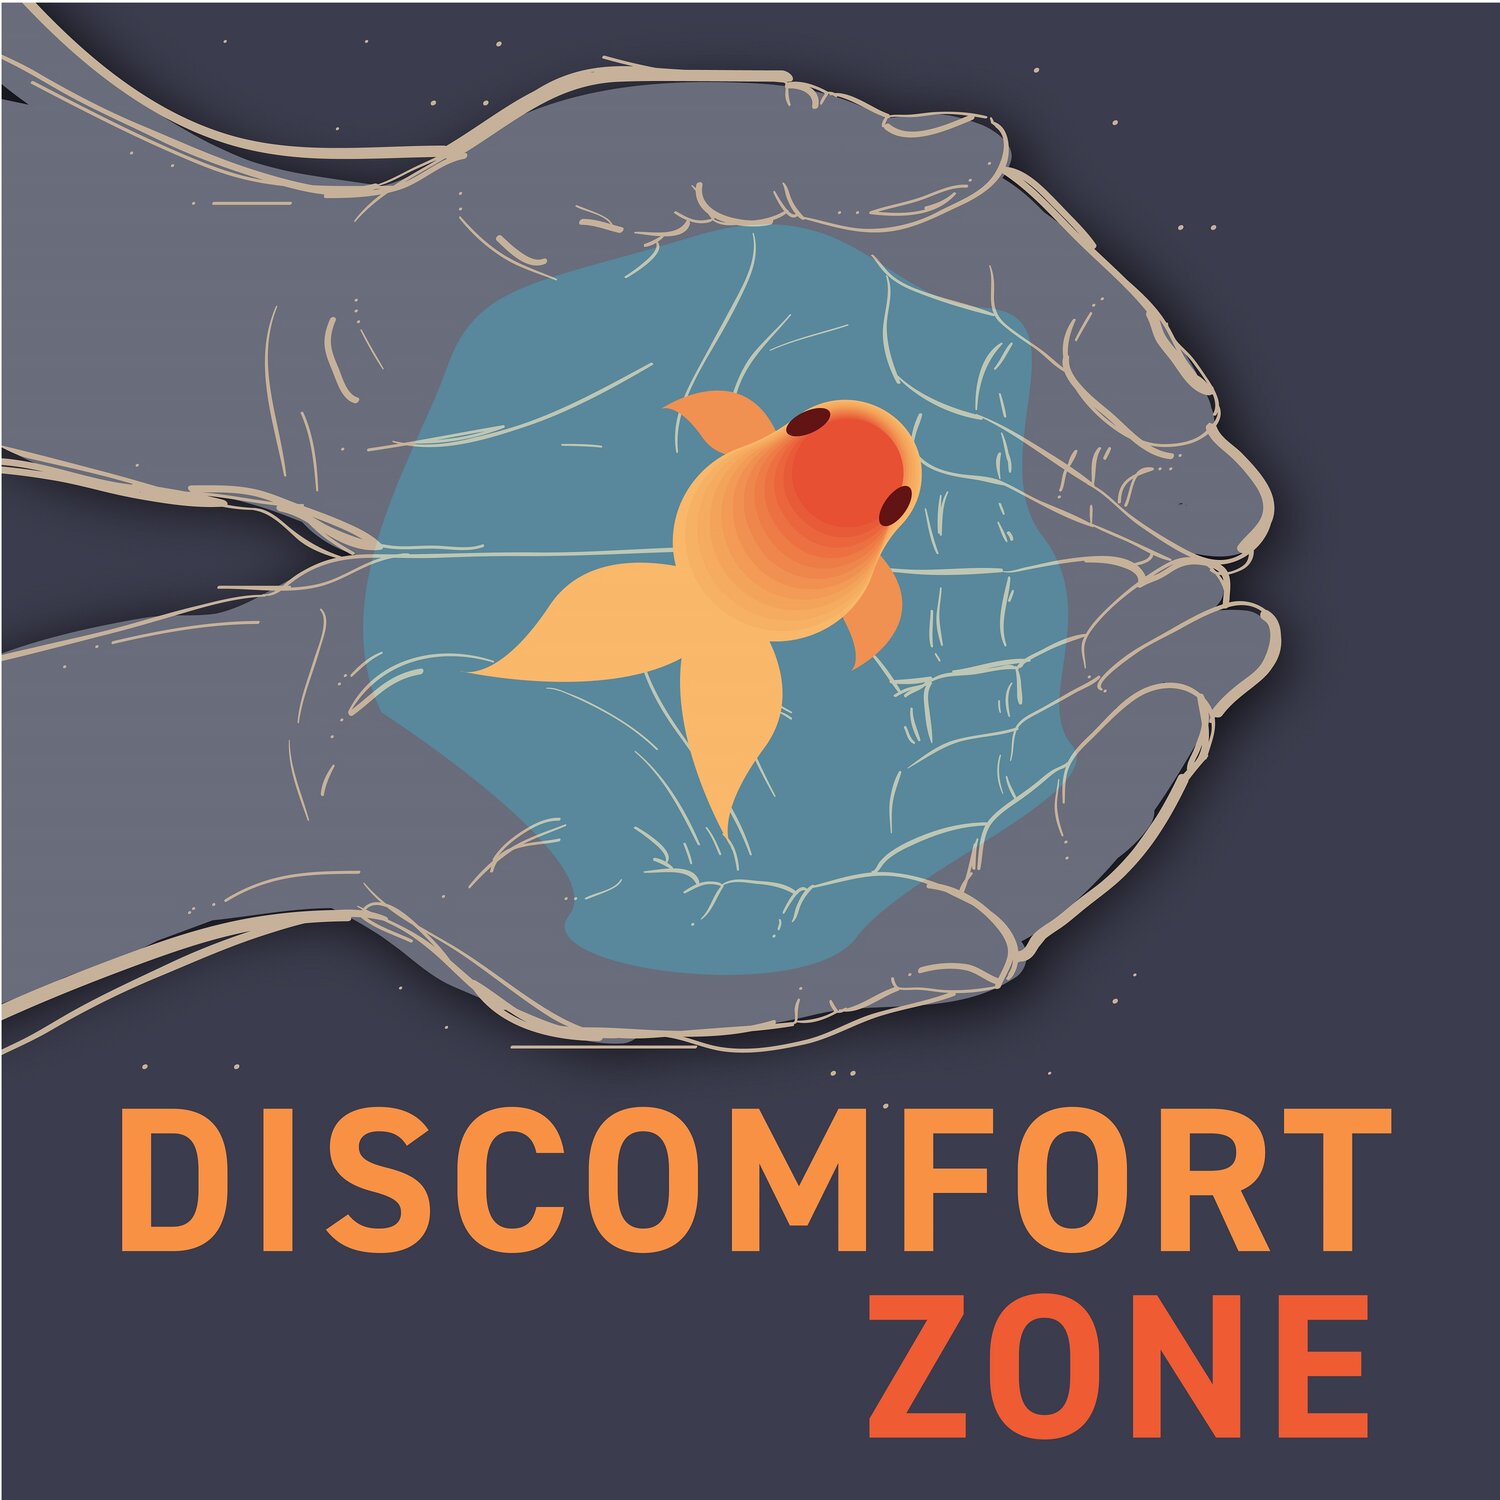 Big News for Discomfort Zone!